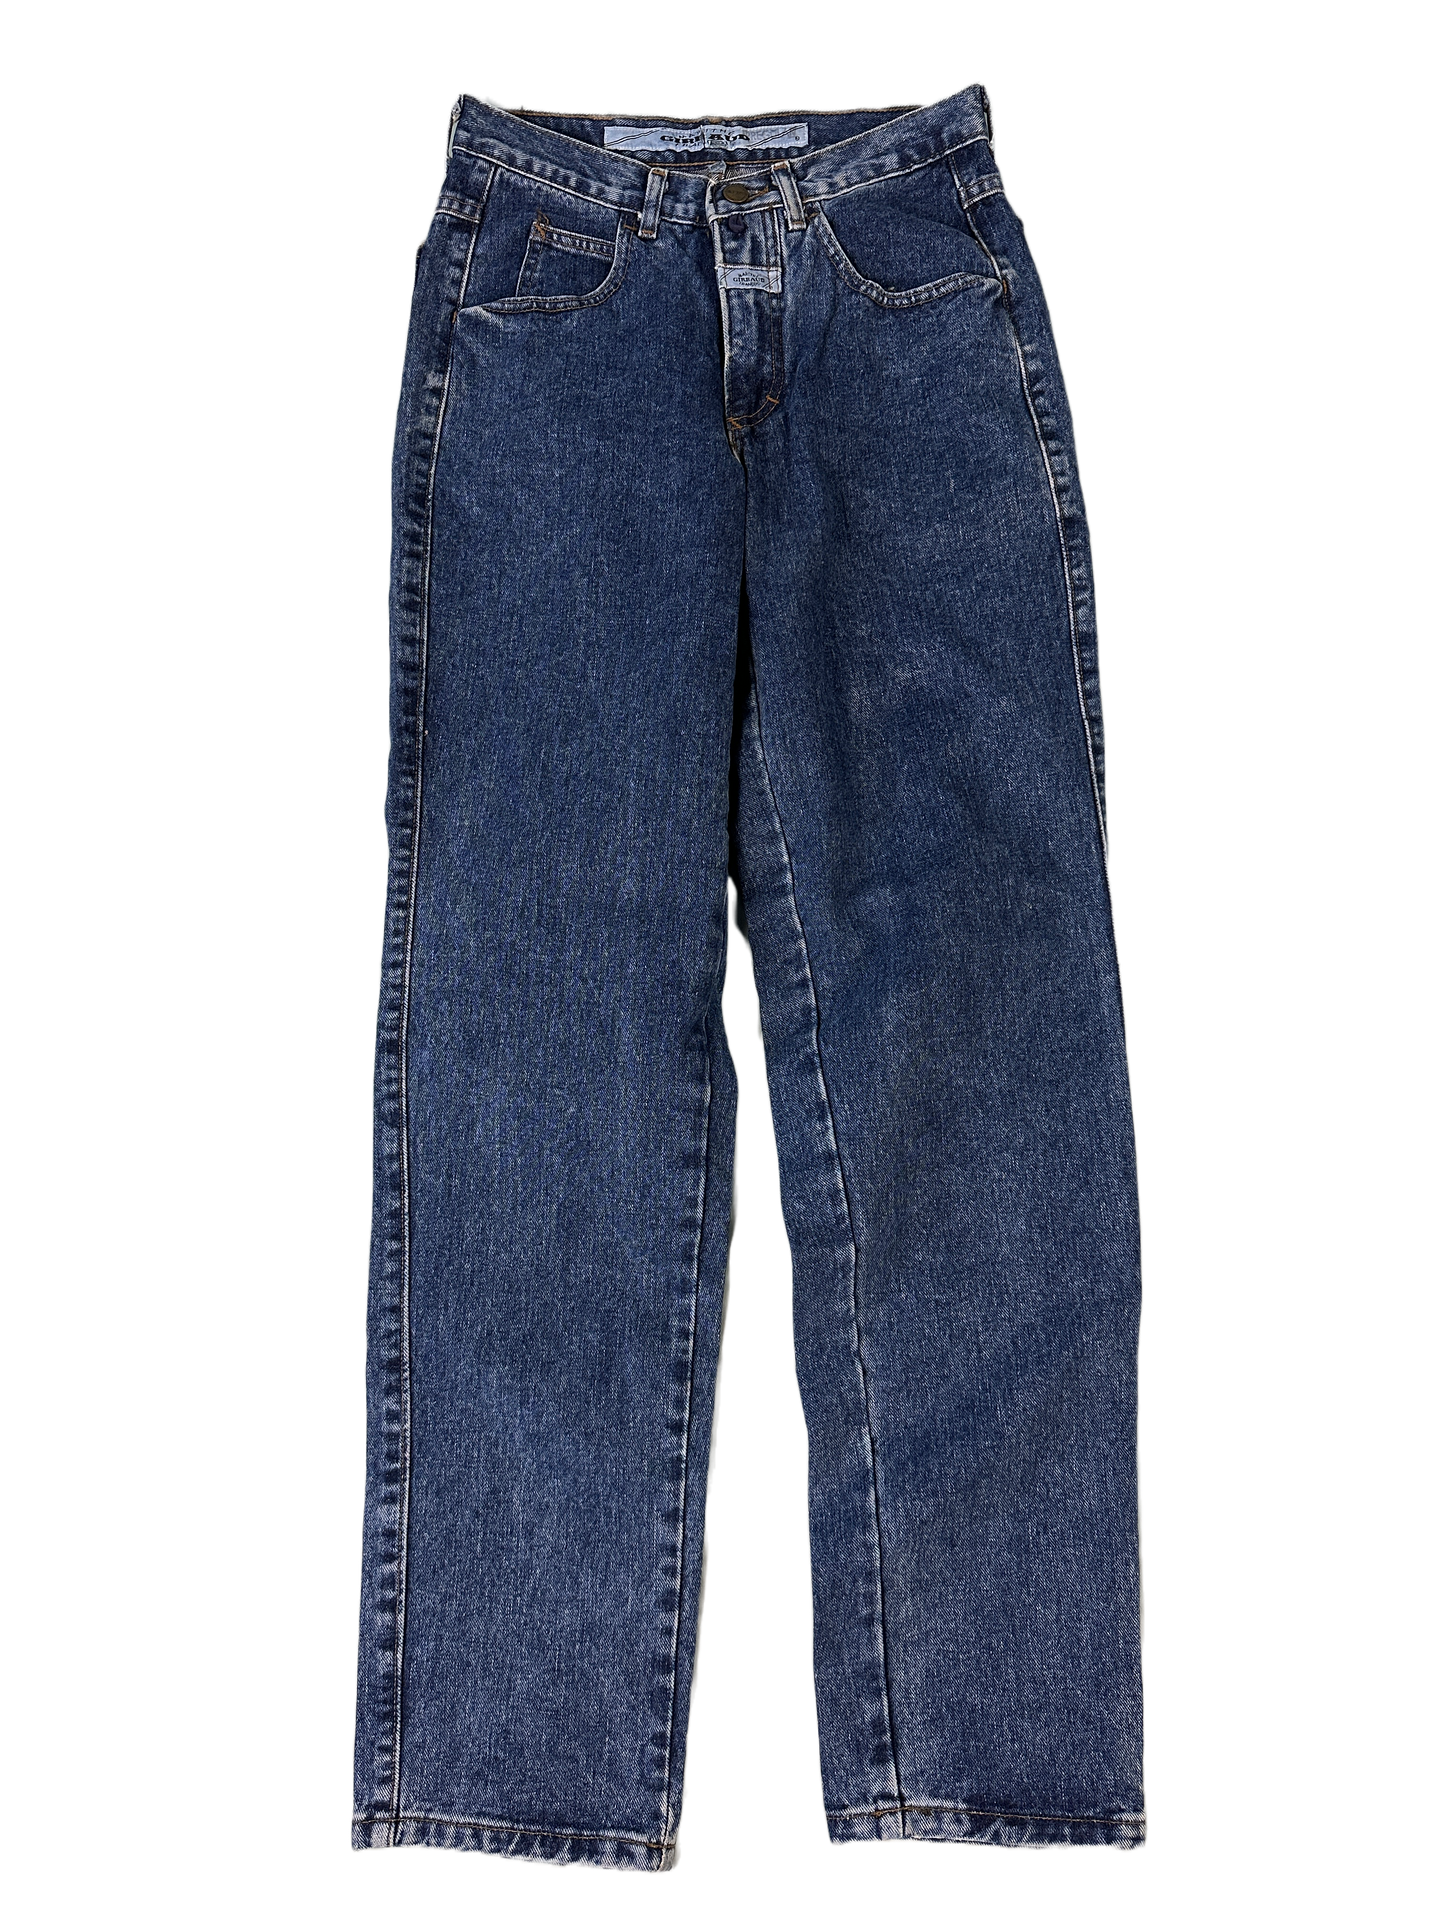 Marithe Francois Girbaud Vintage Jeans - 28